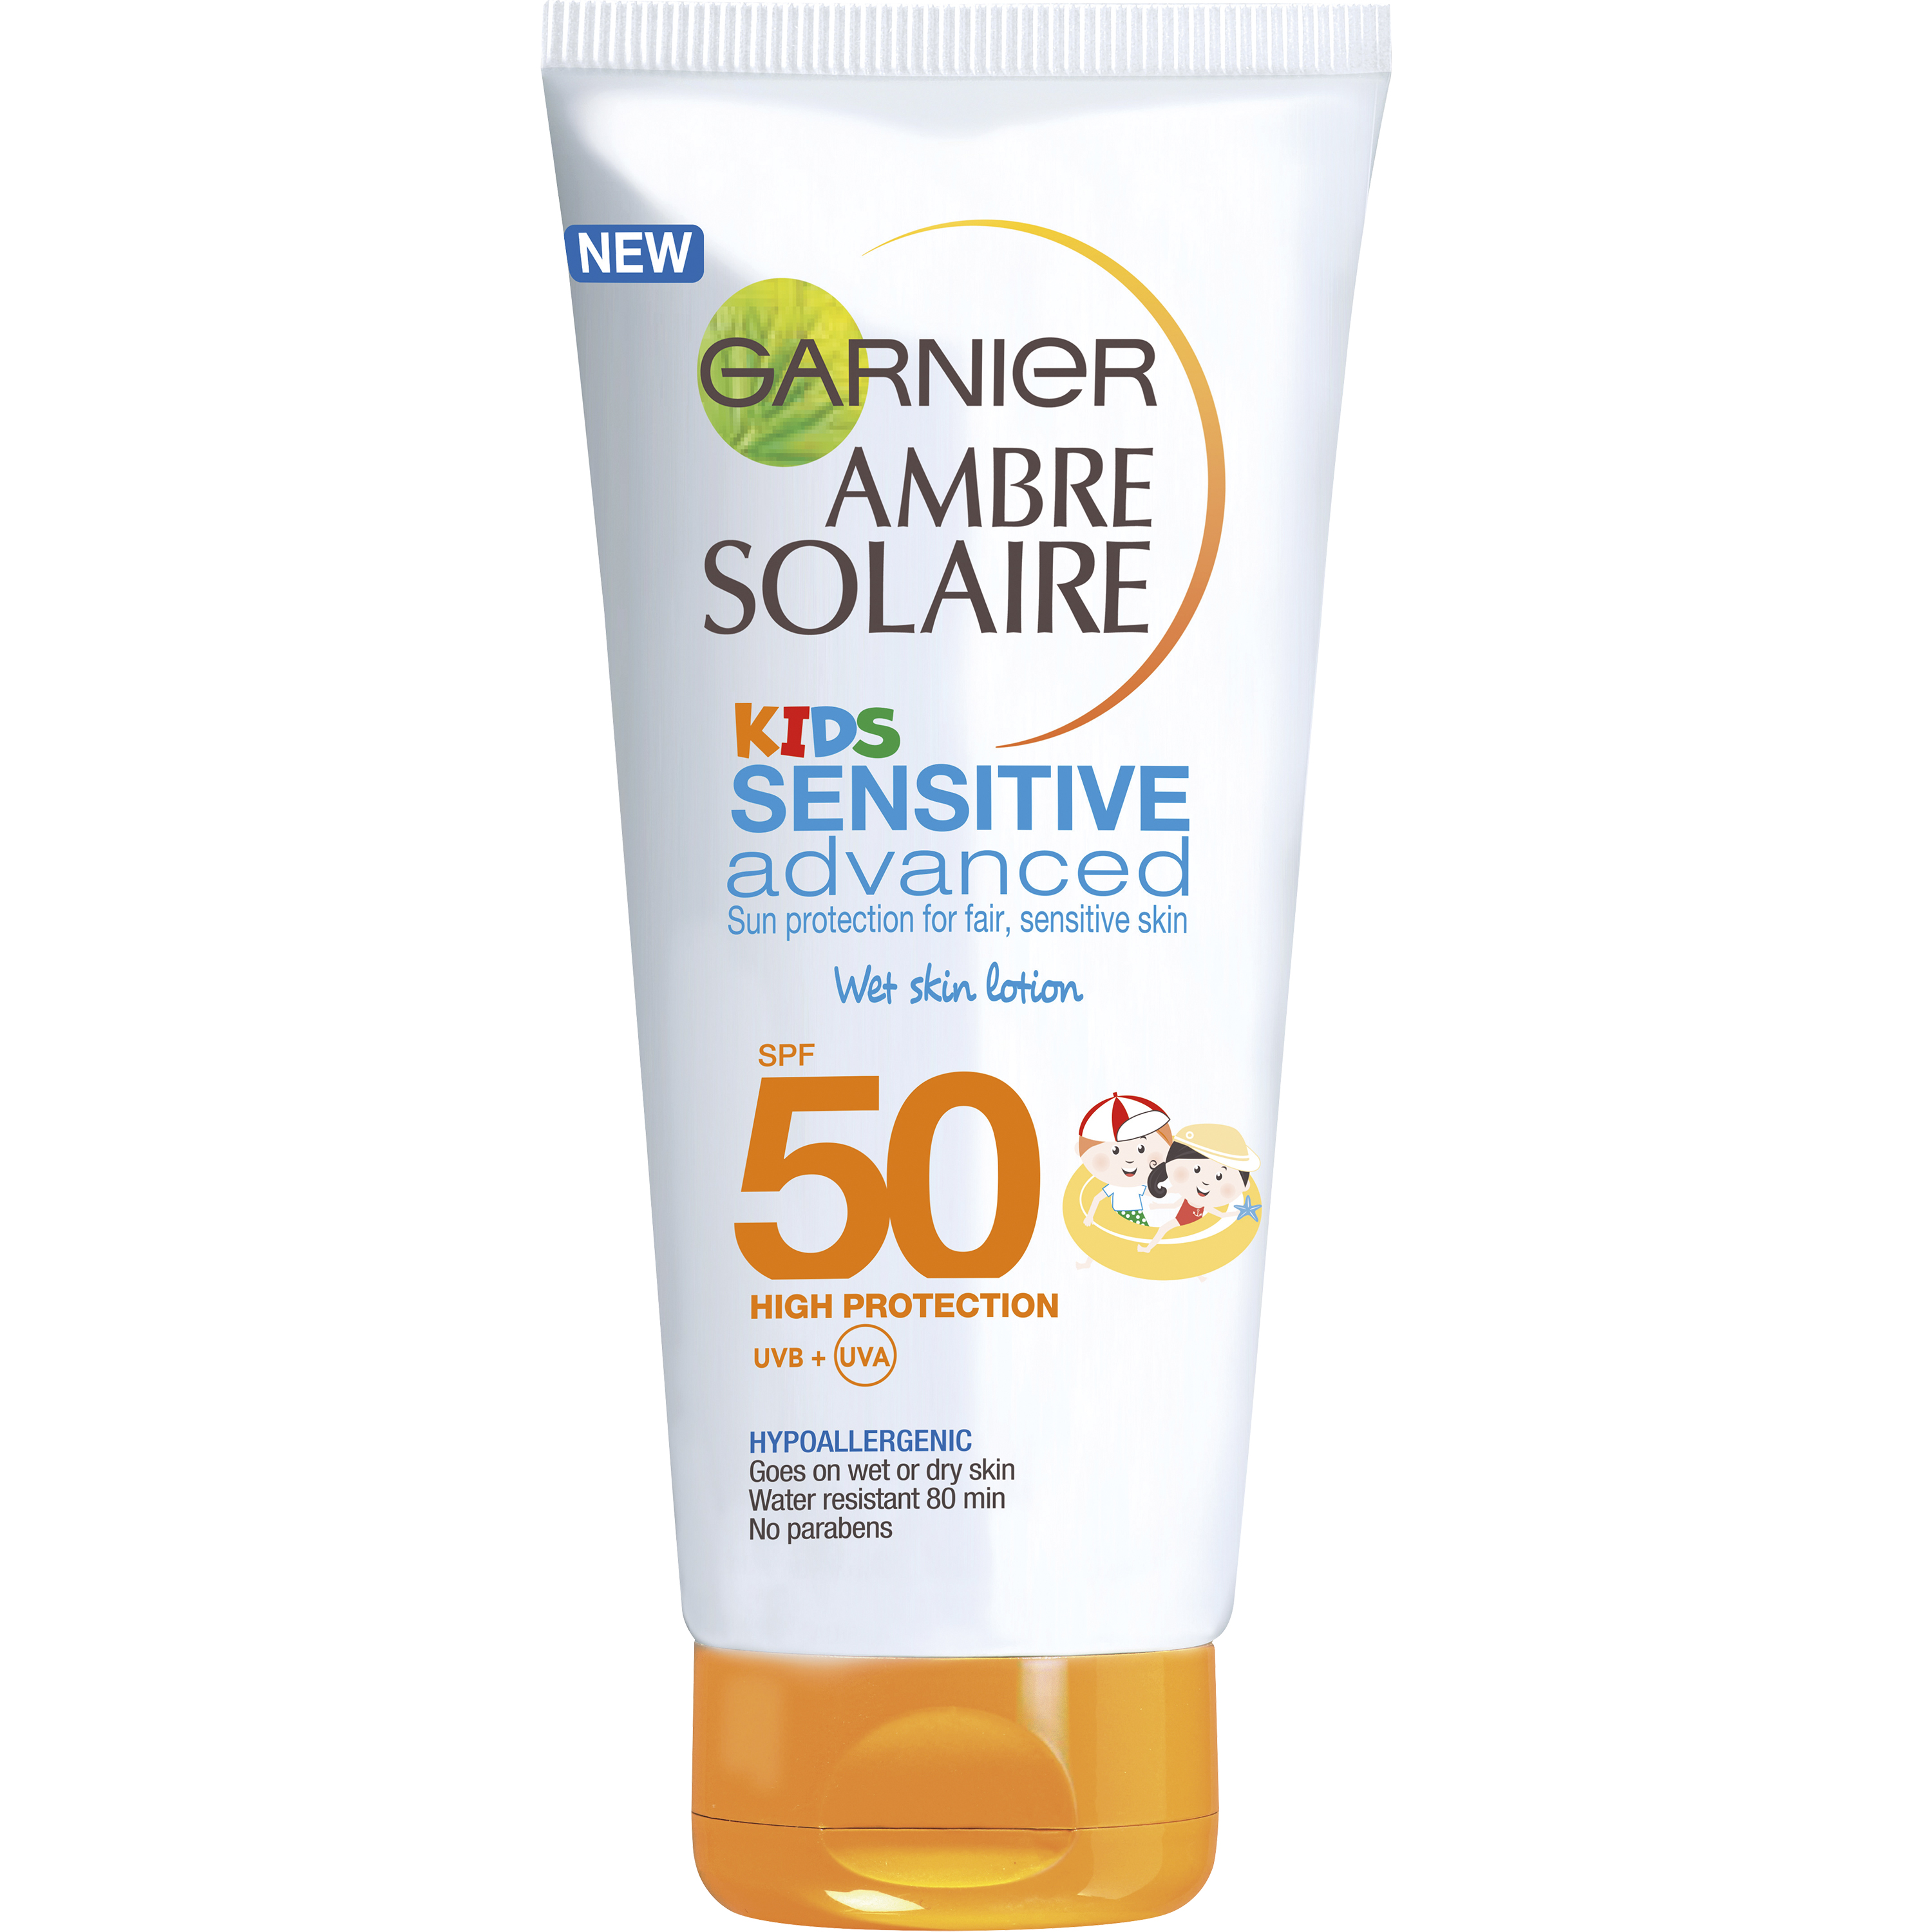 Garnier - Ambre Solaire - Kids Sensitive Adv. Easy Peasy Wet Skin Sunlotion 150 ml - SPF50